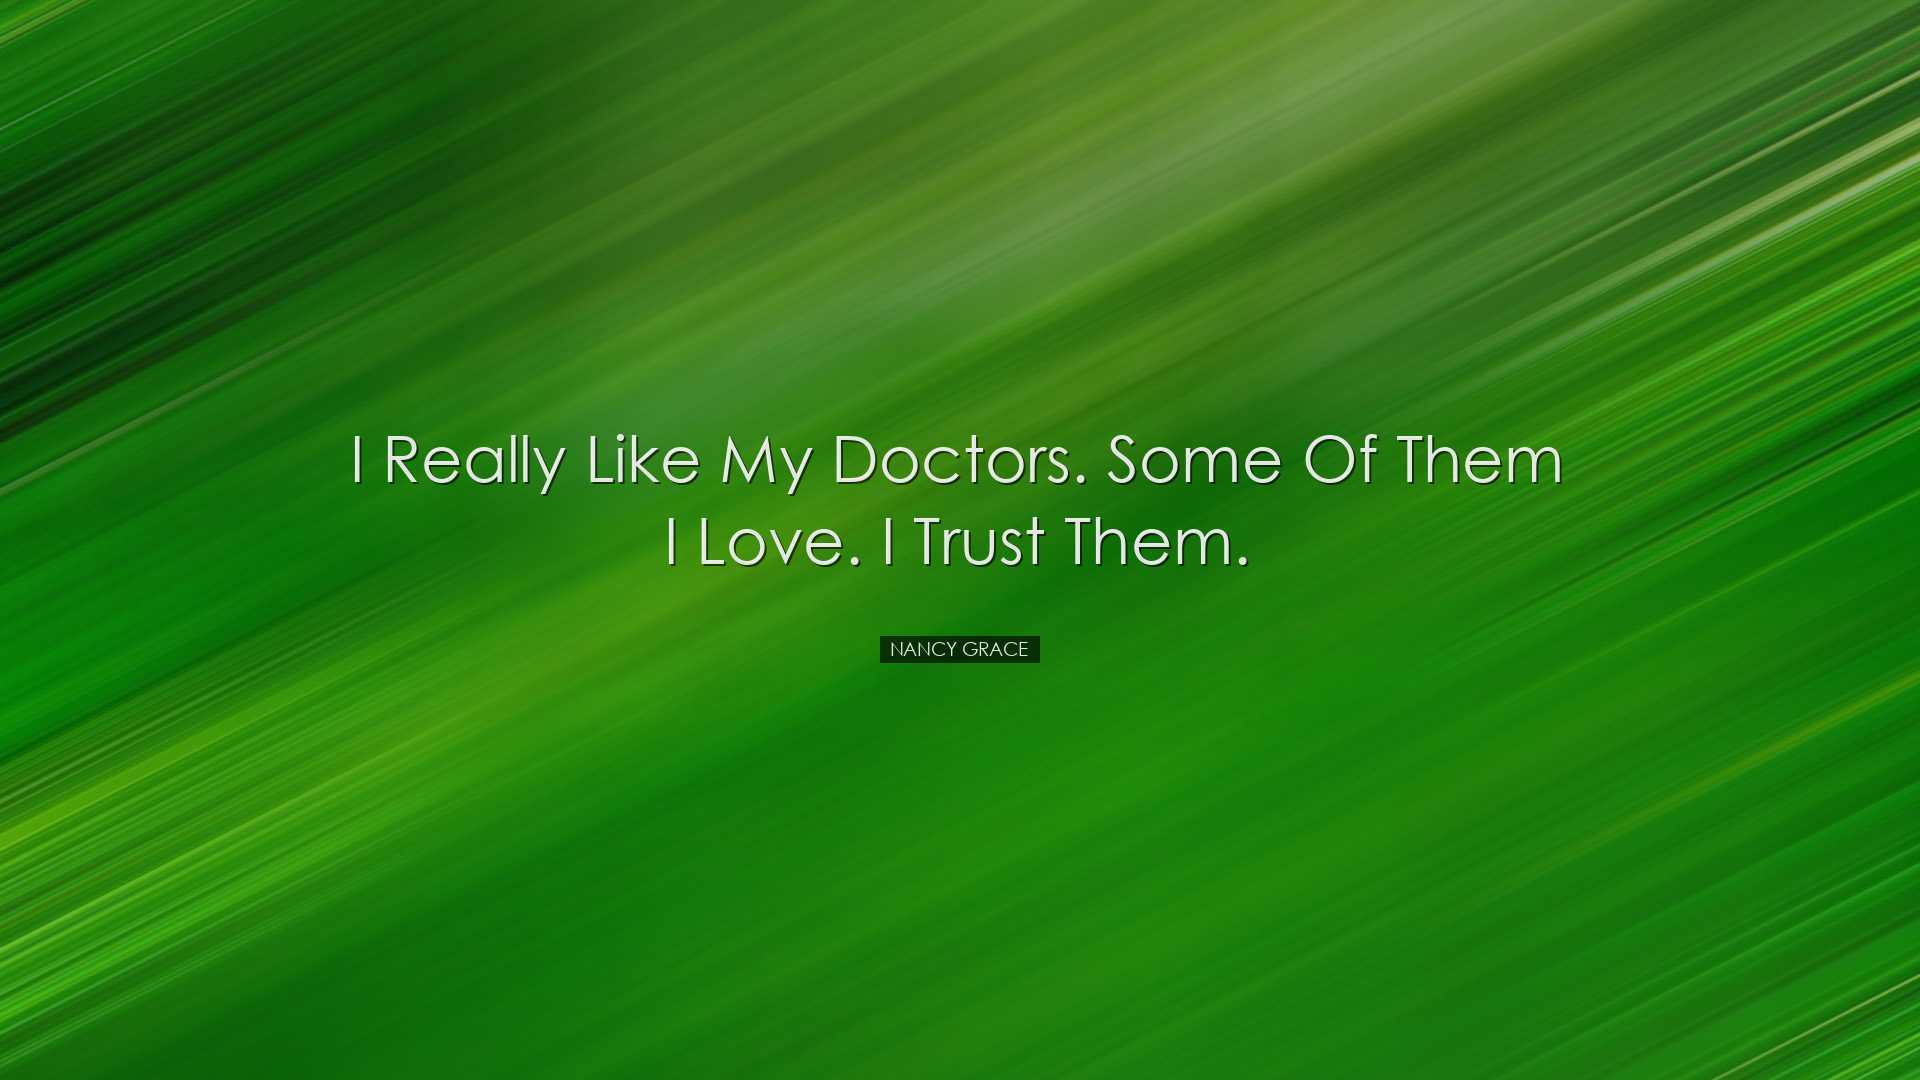 I really like my doctors. Some of them I love. I trust them. - Nan